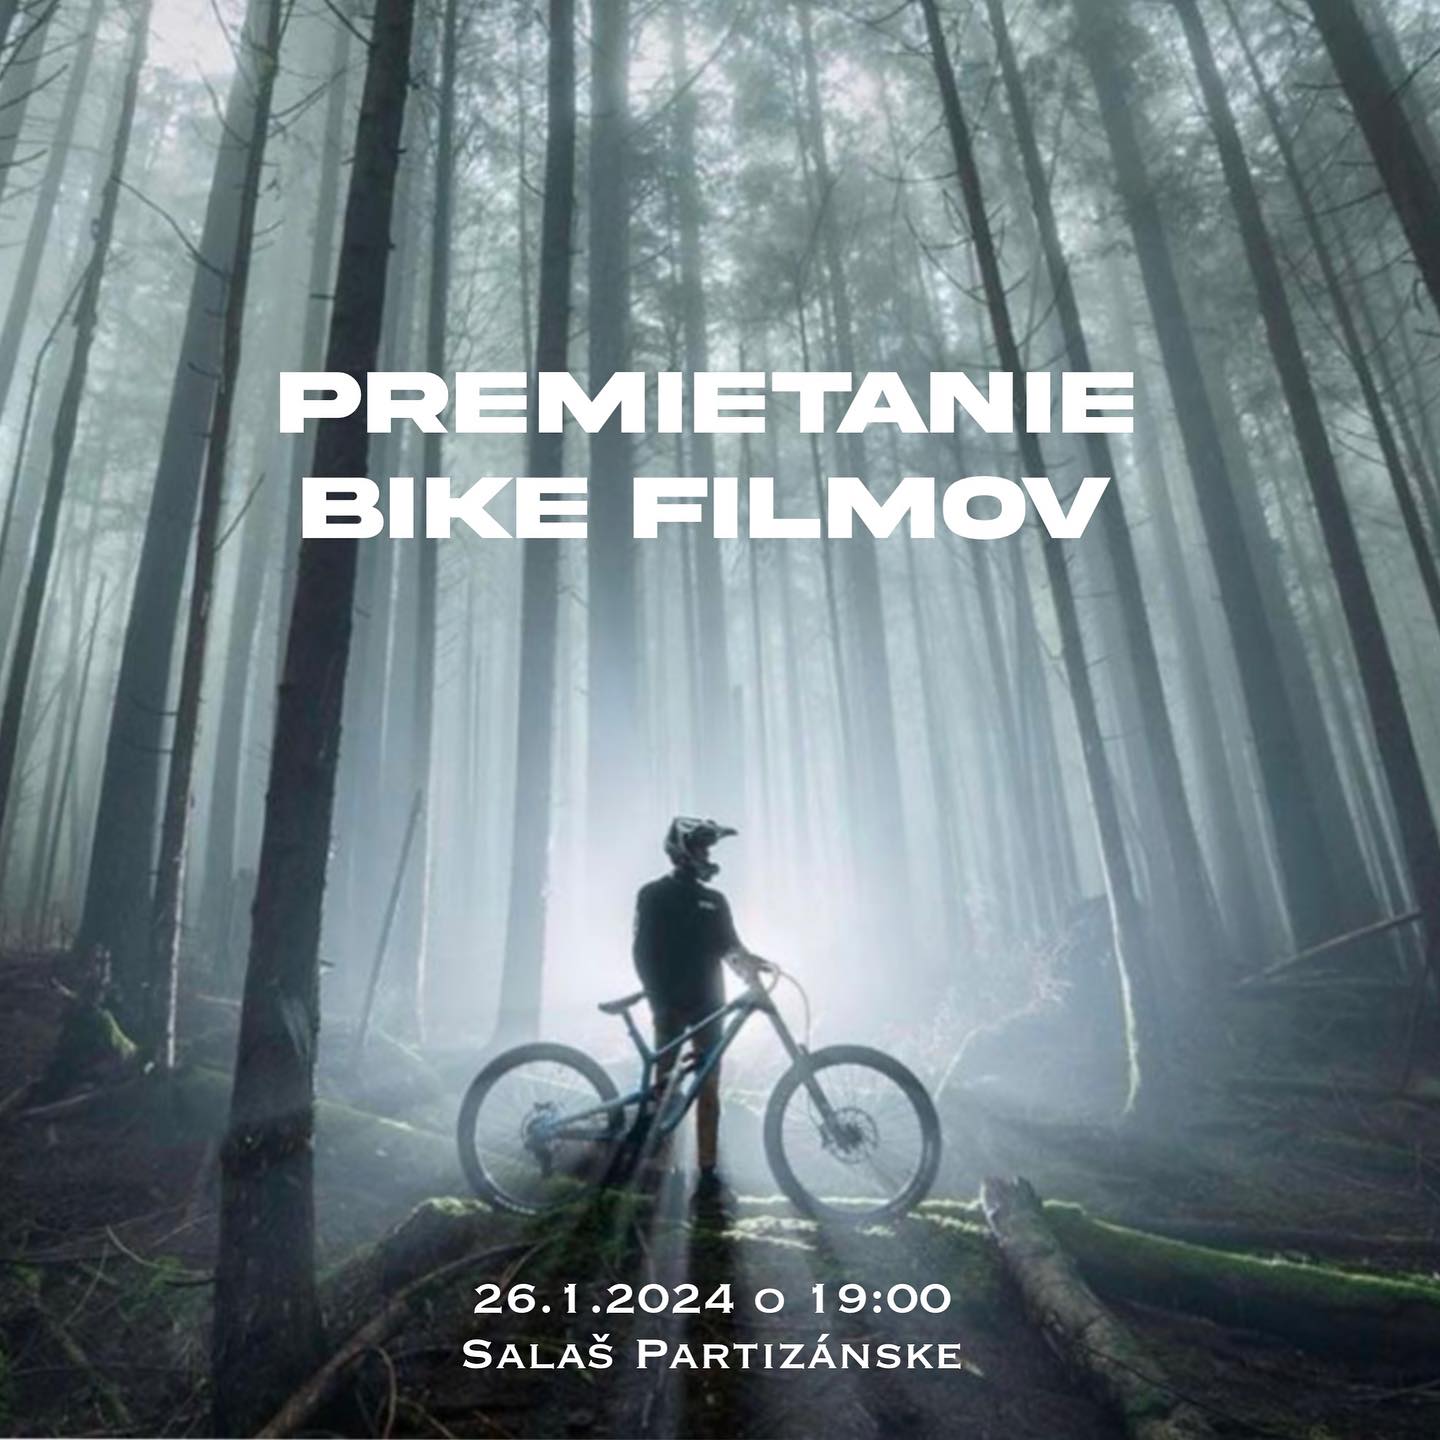 Premietanie bike filmov @ Salaš reštaurácia a penzión